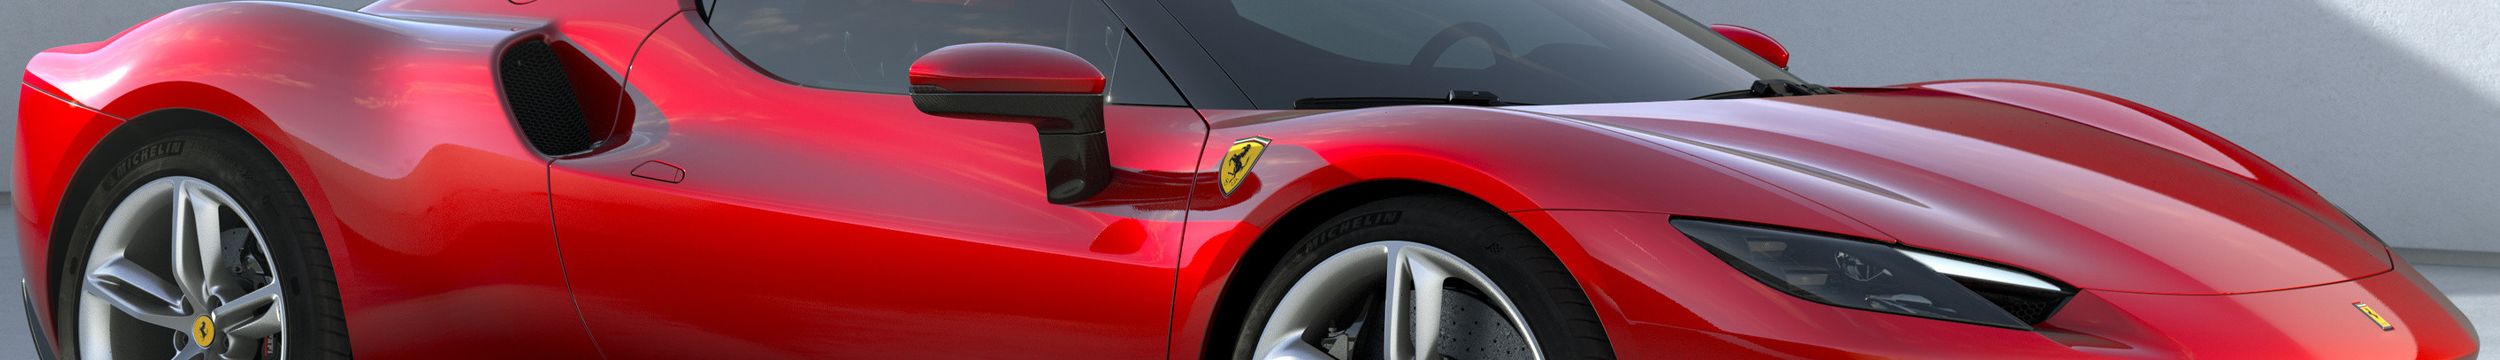 Ferrari page header image